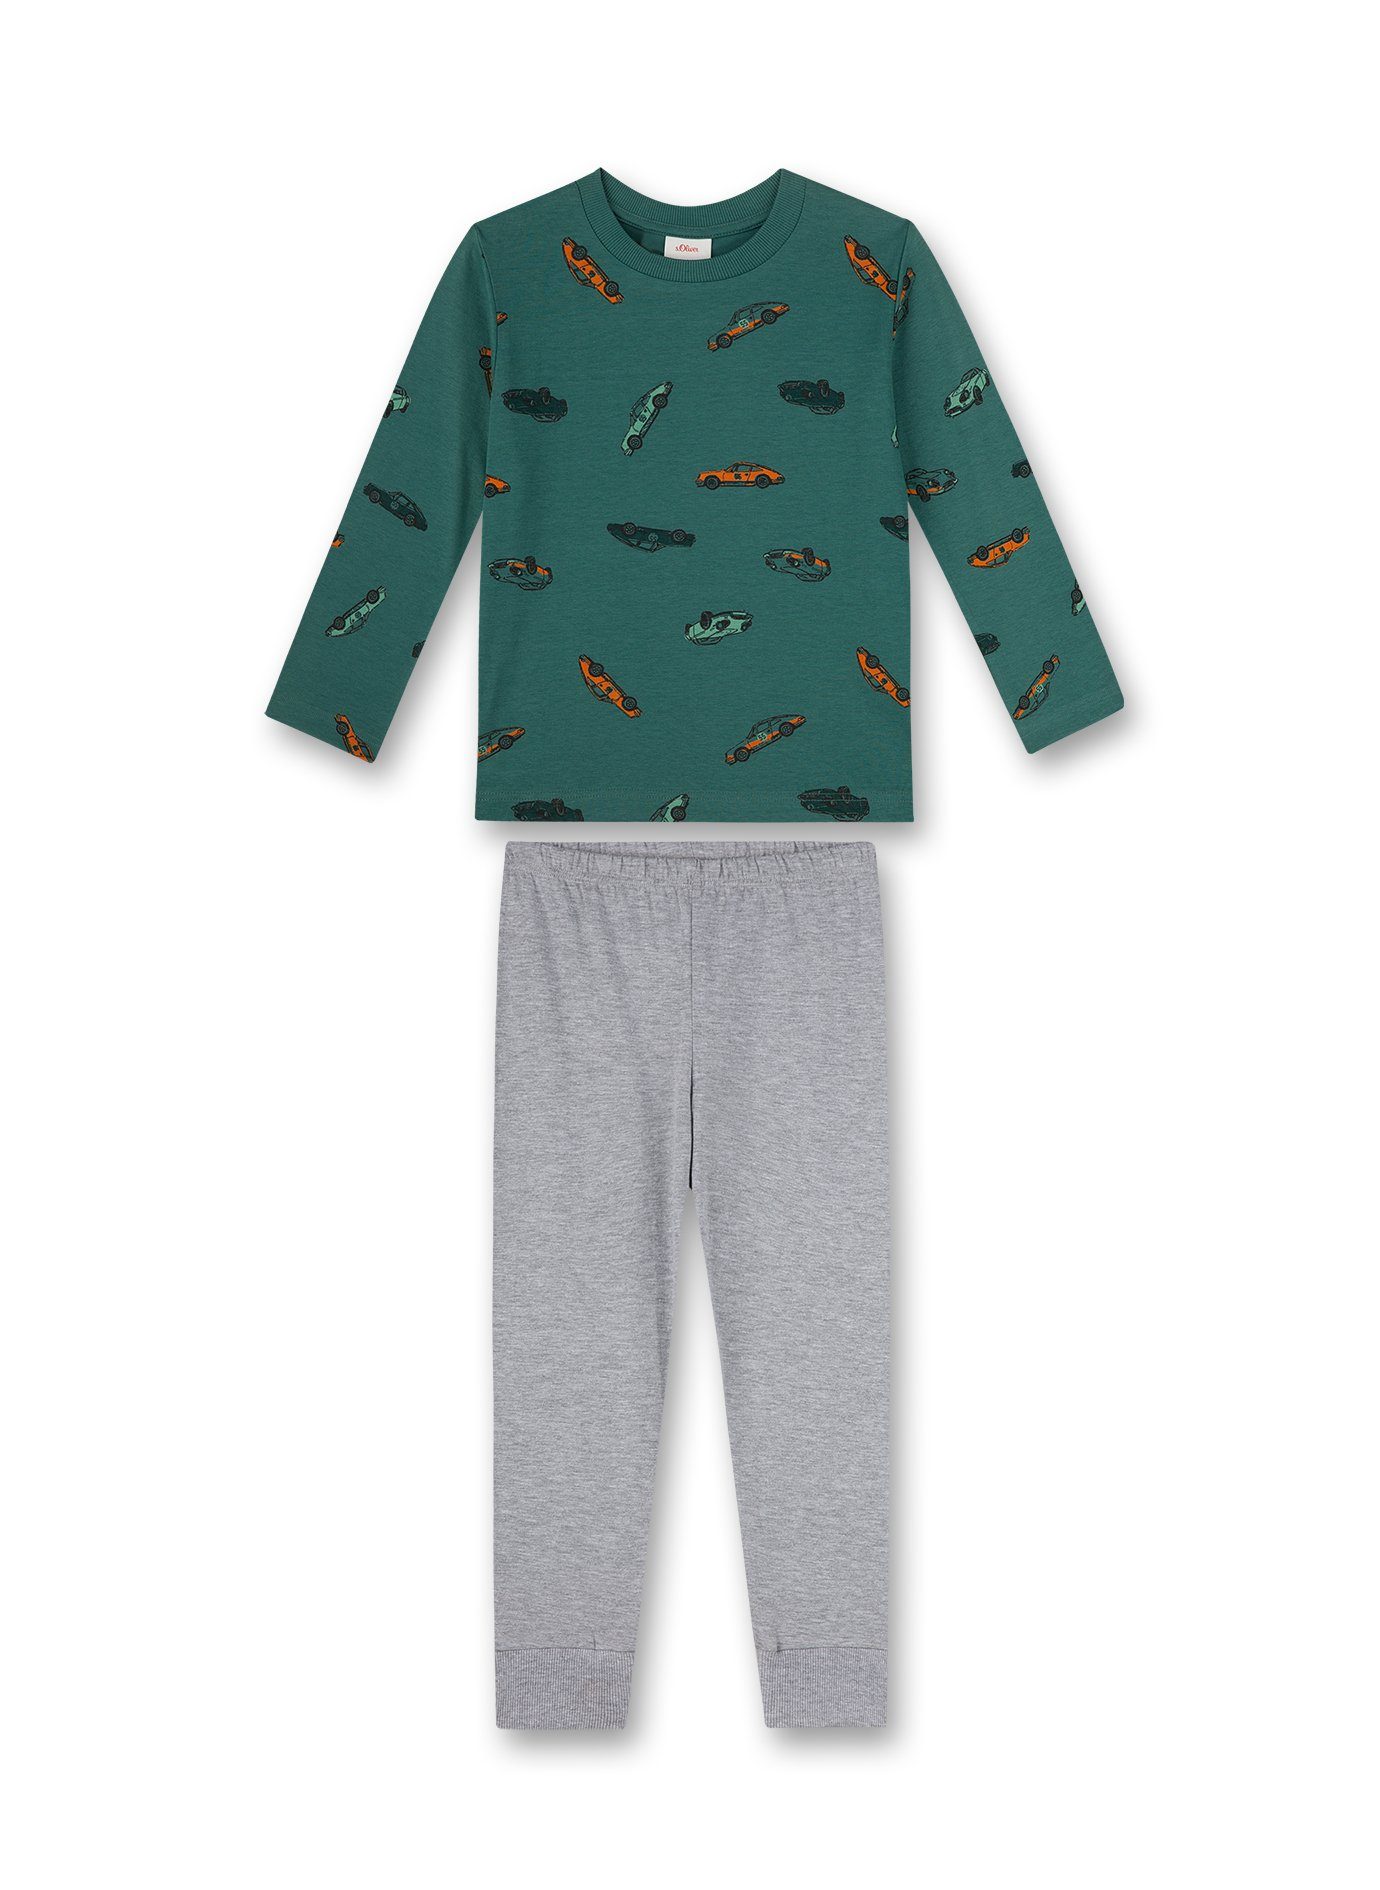 s.Oliver Junior Pyjama s.Oliver grün Pyjama lang (2 tlg) grau Rennauto Jungen Schlafanzug